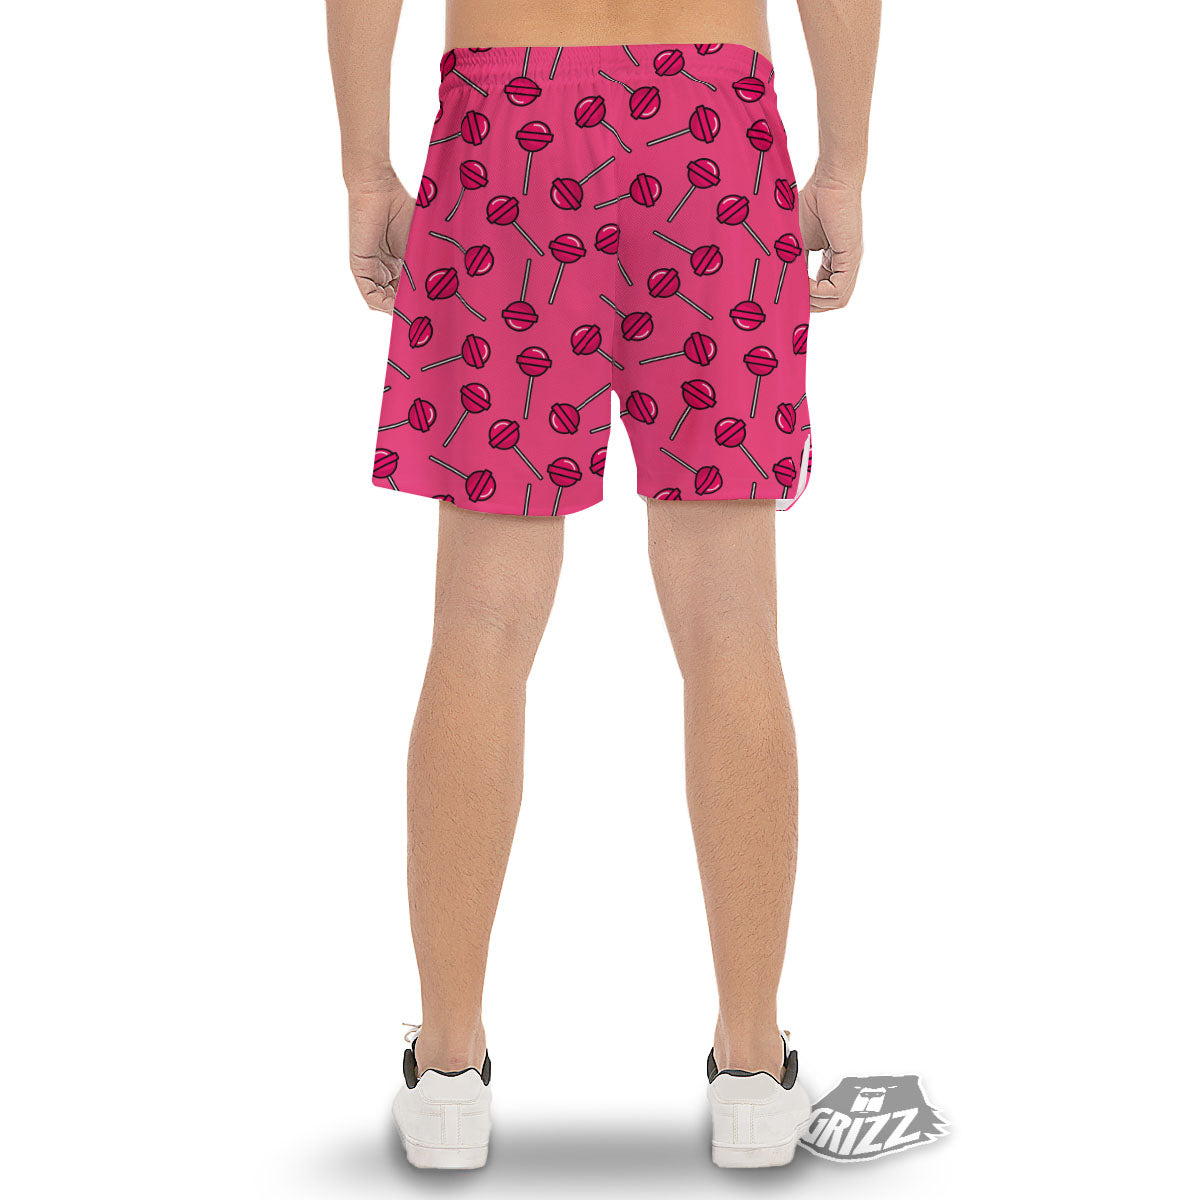 Lollipop Candy Pink Print Pattern Men's Gym Shorts-grizzshop